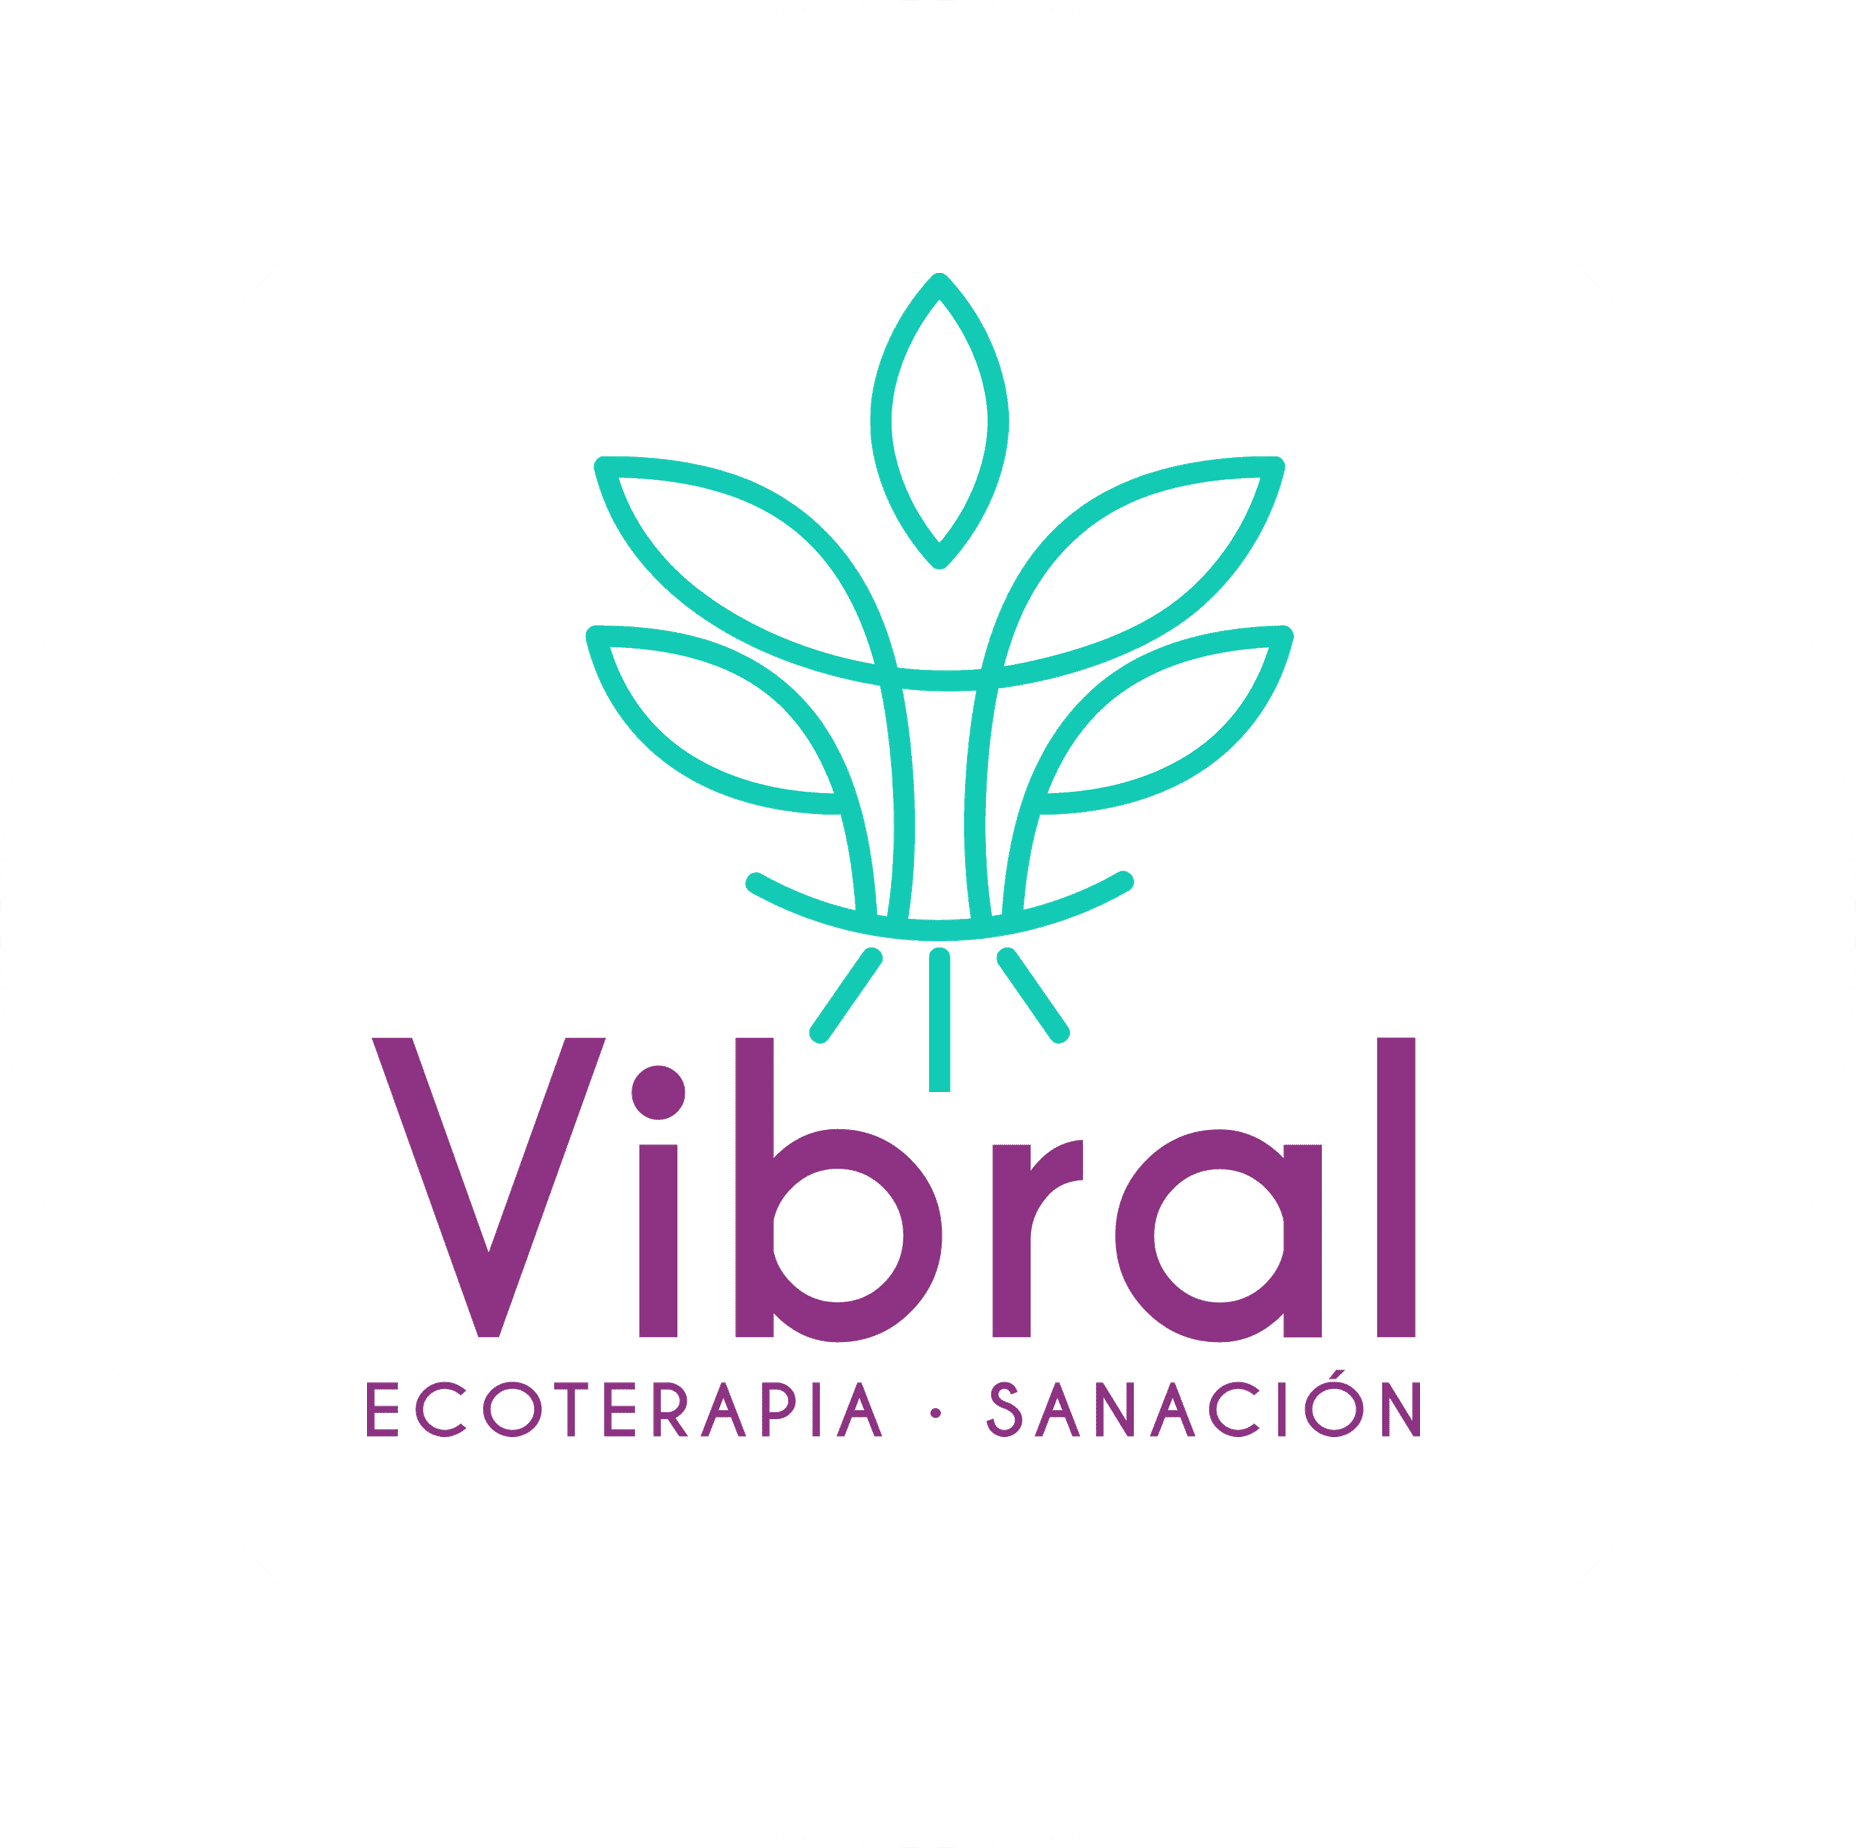 Vibral Ecoterapia